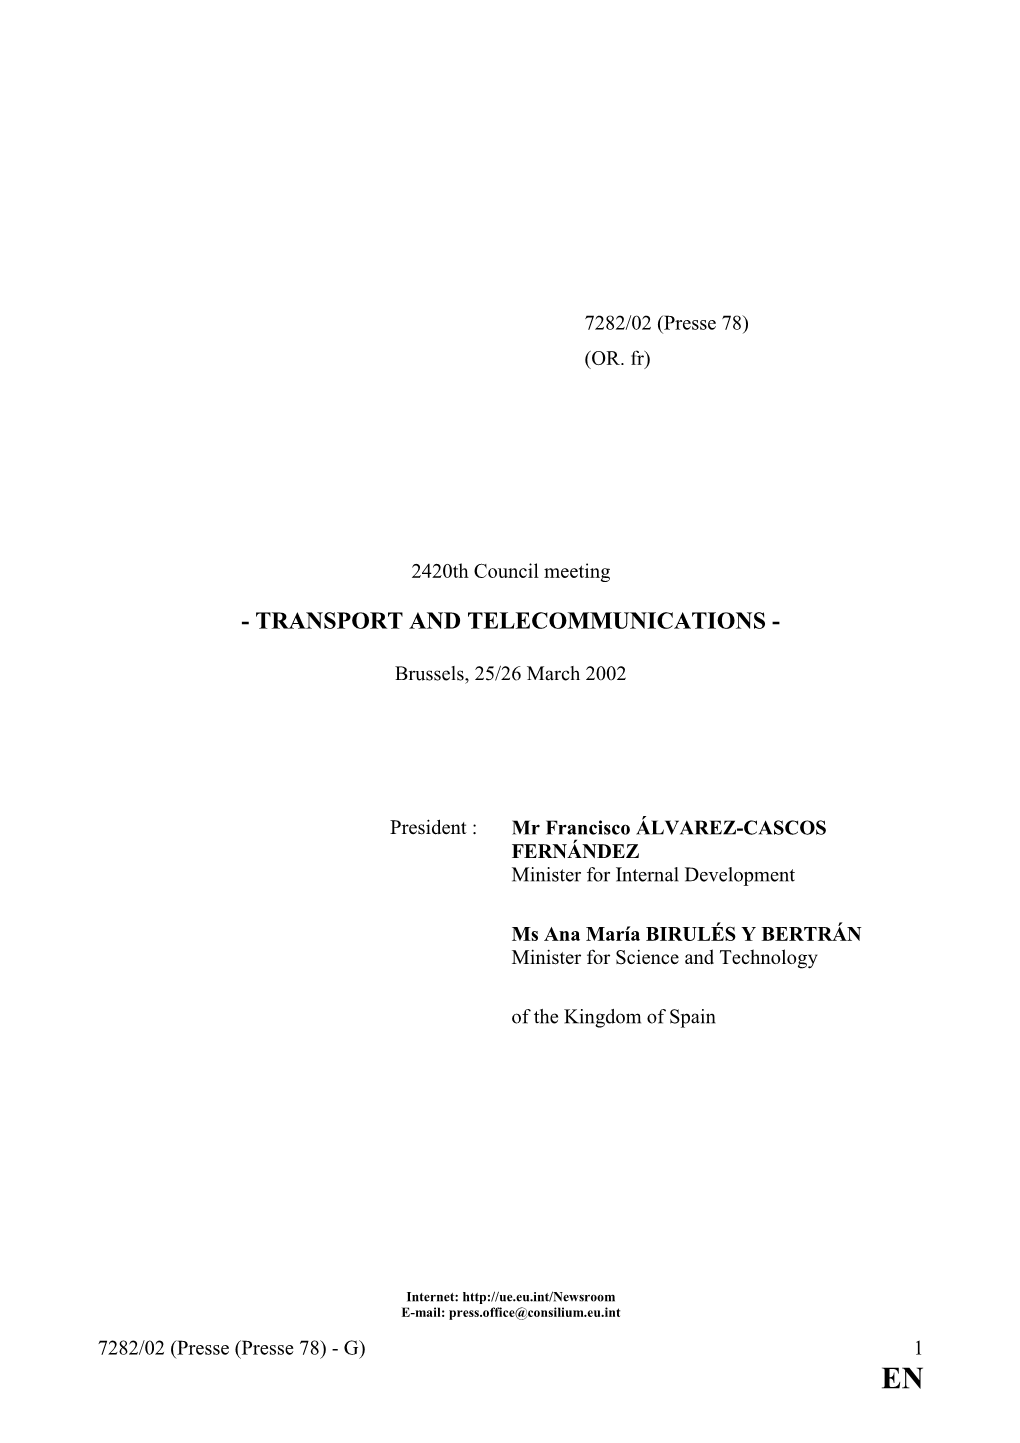 Transport and Telecommunications